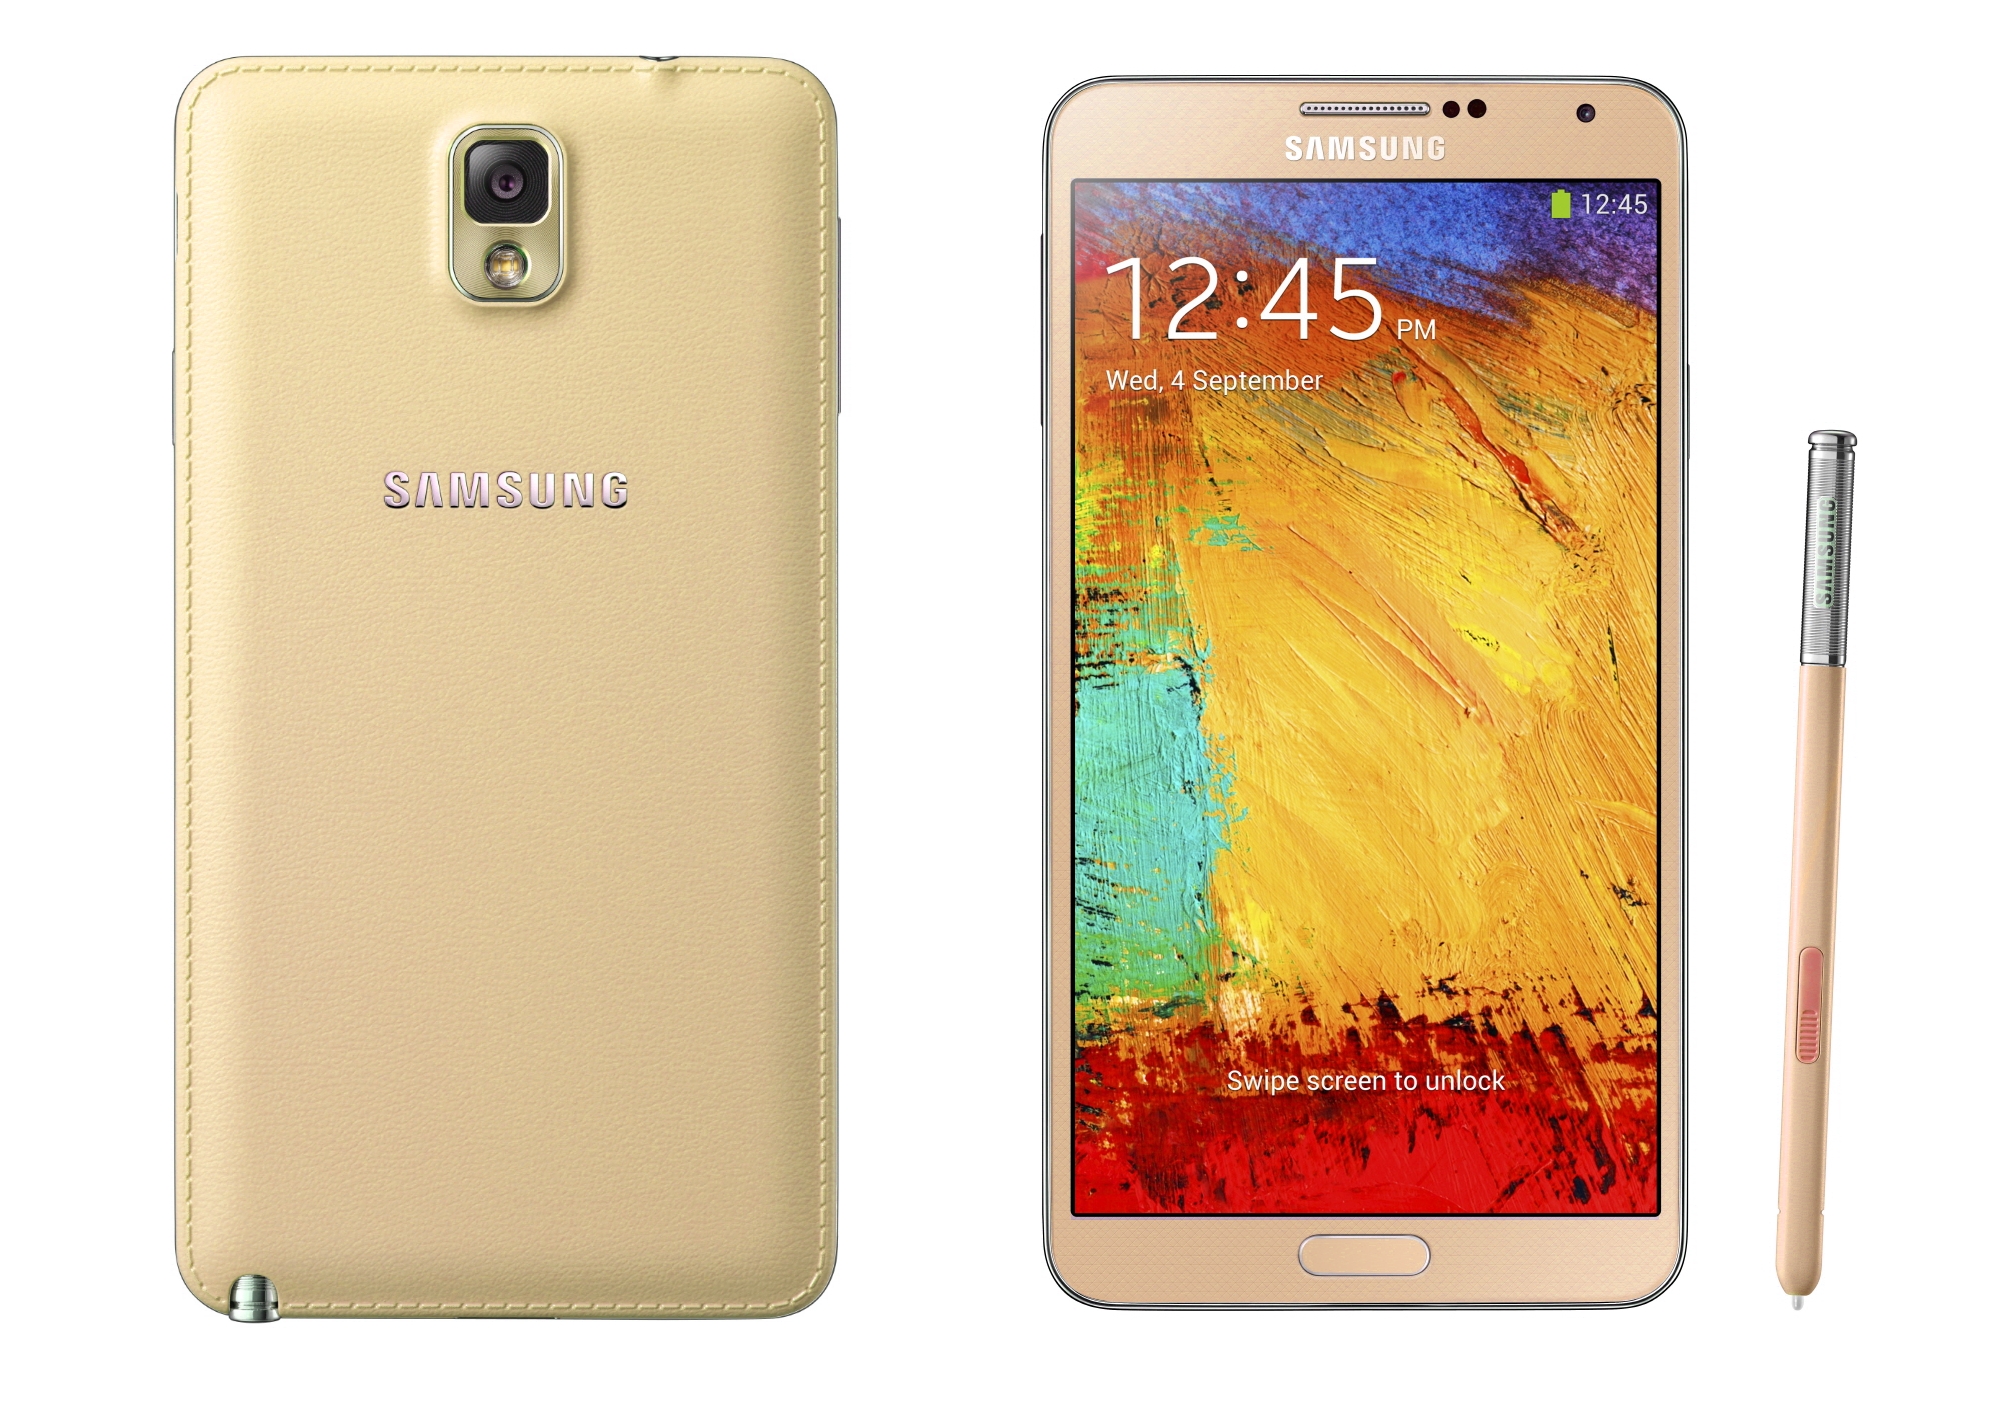 Samsung-Galaxy-Note-3-gold